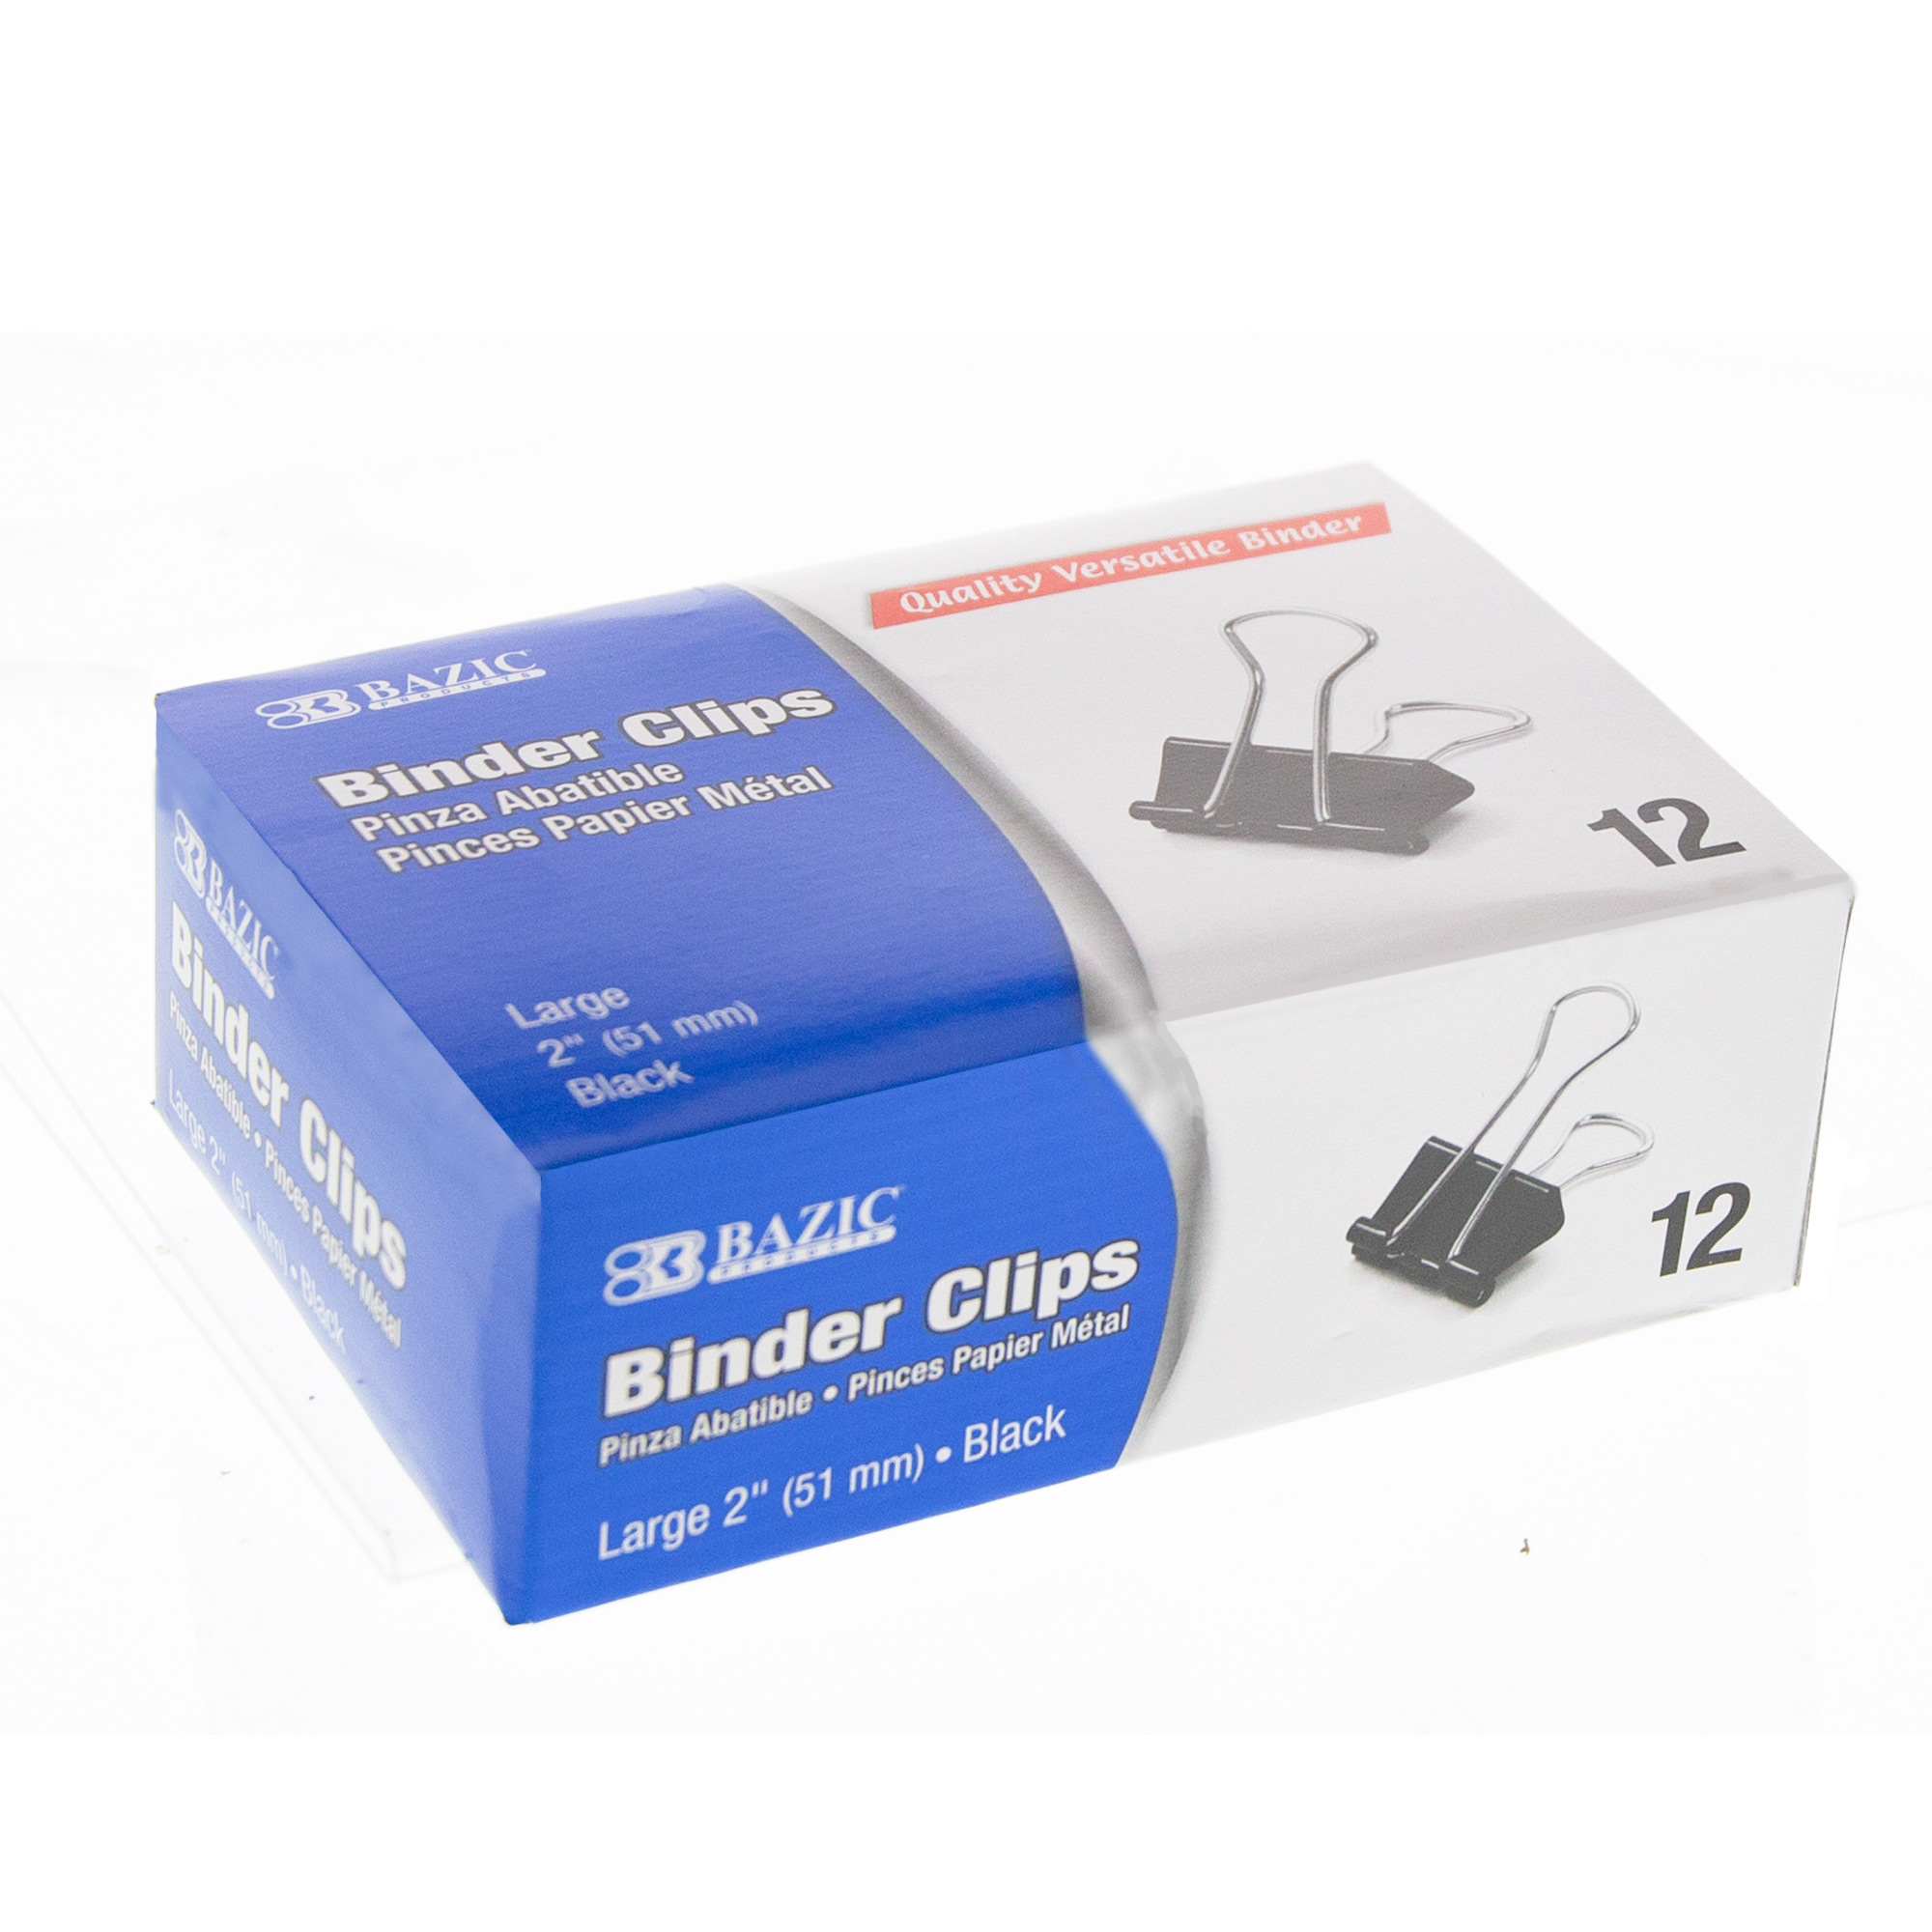 Charles Leonard Binder Clips - Black Small 12Ct Box Reusable BoxMFG# 79312